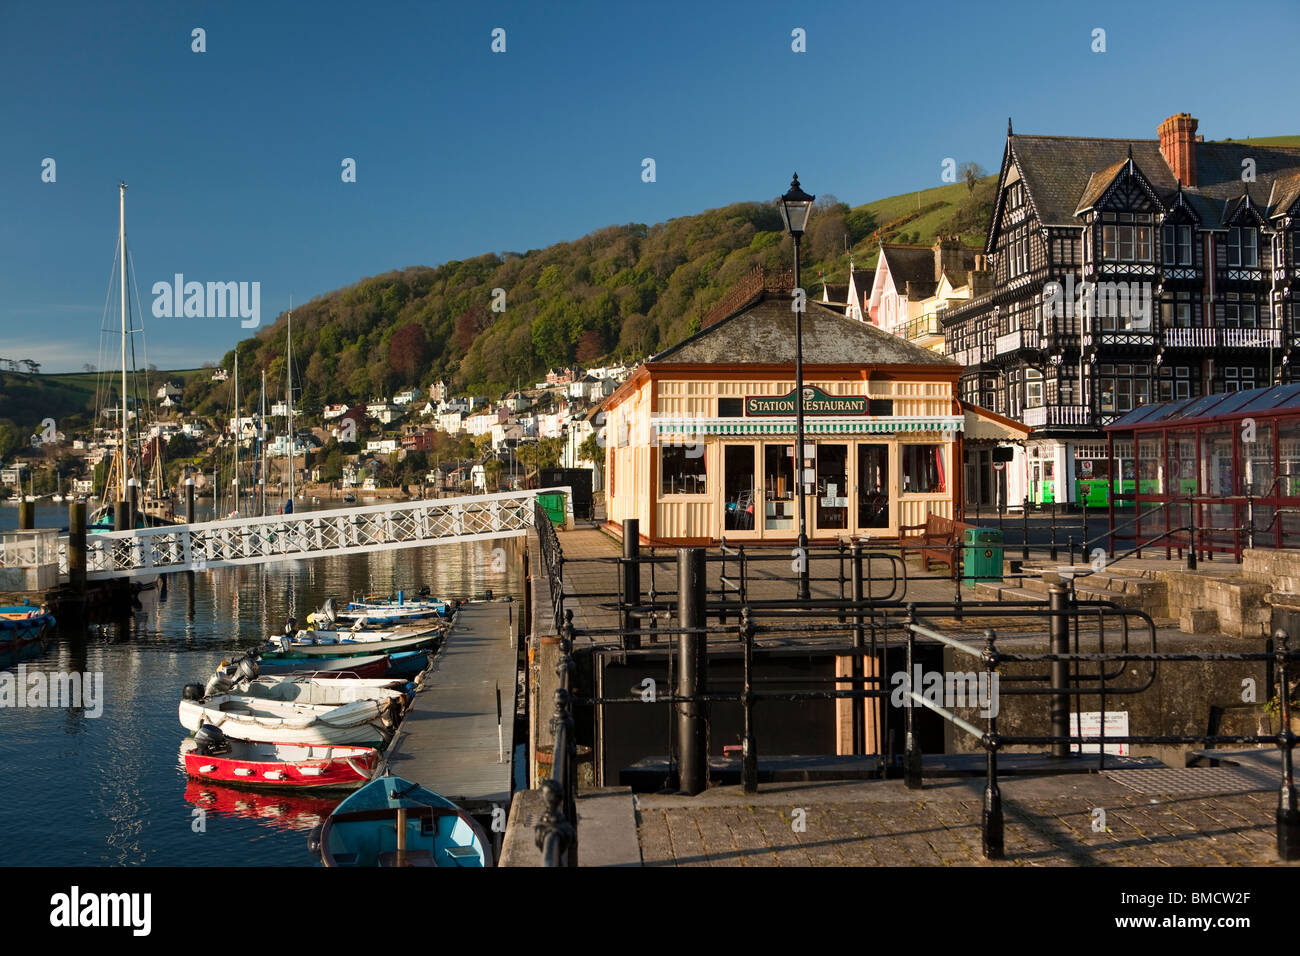 UK, England, Devon, Dartmouth, Station Restaurant at main tourist boat jetty Stock Photo